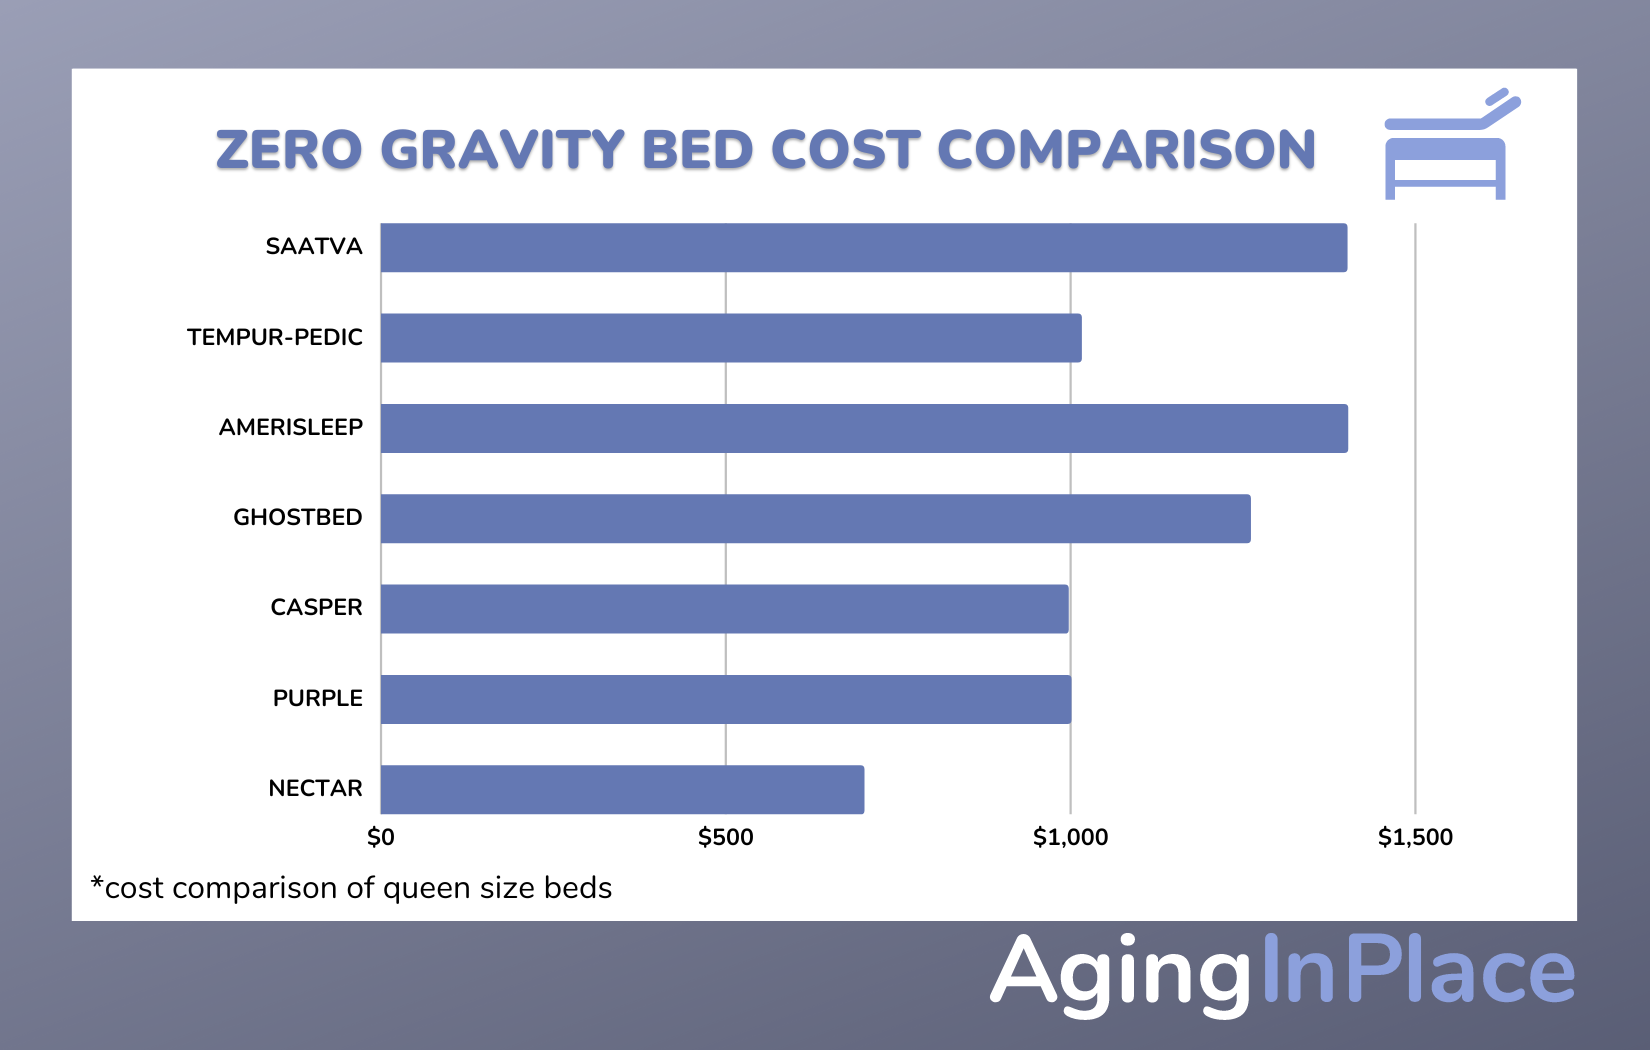 Cost comparison of zero gravity adjustable beds